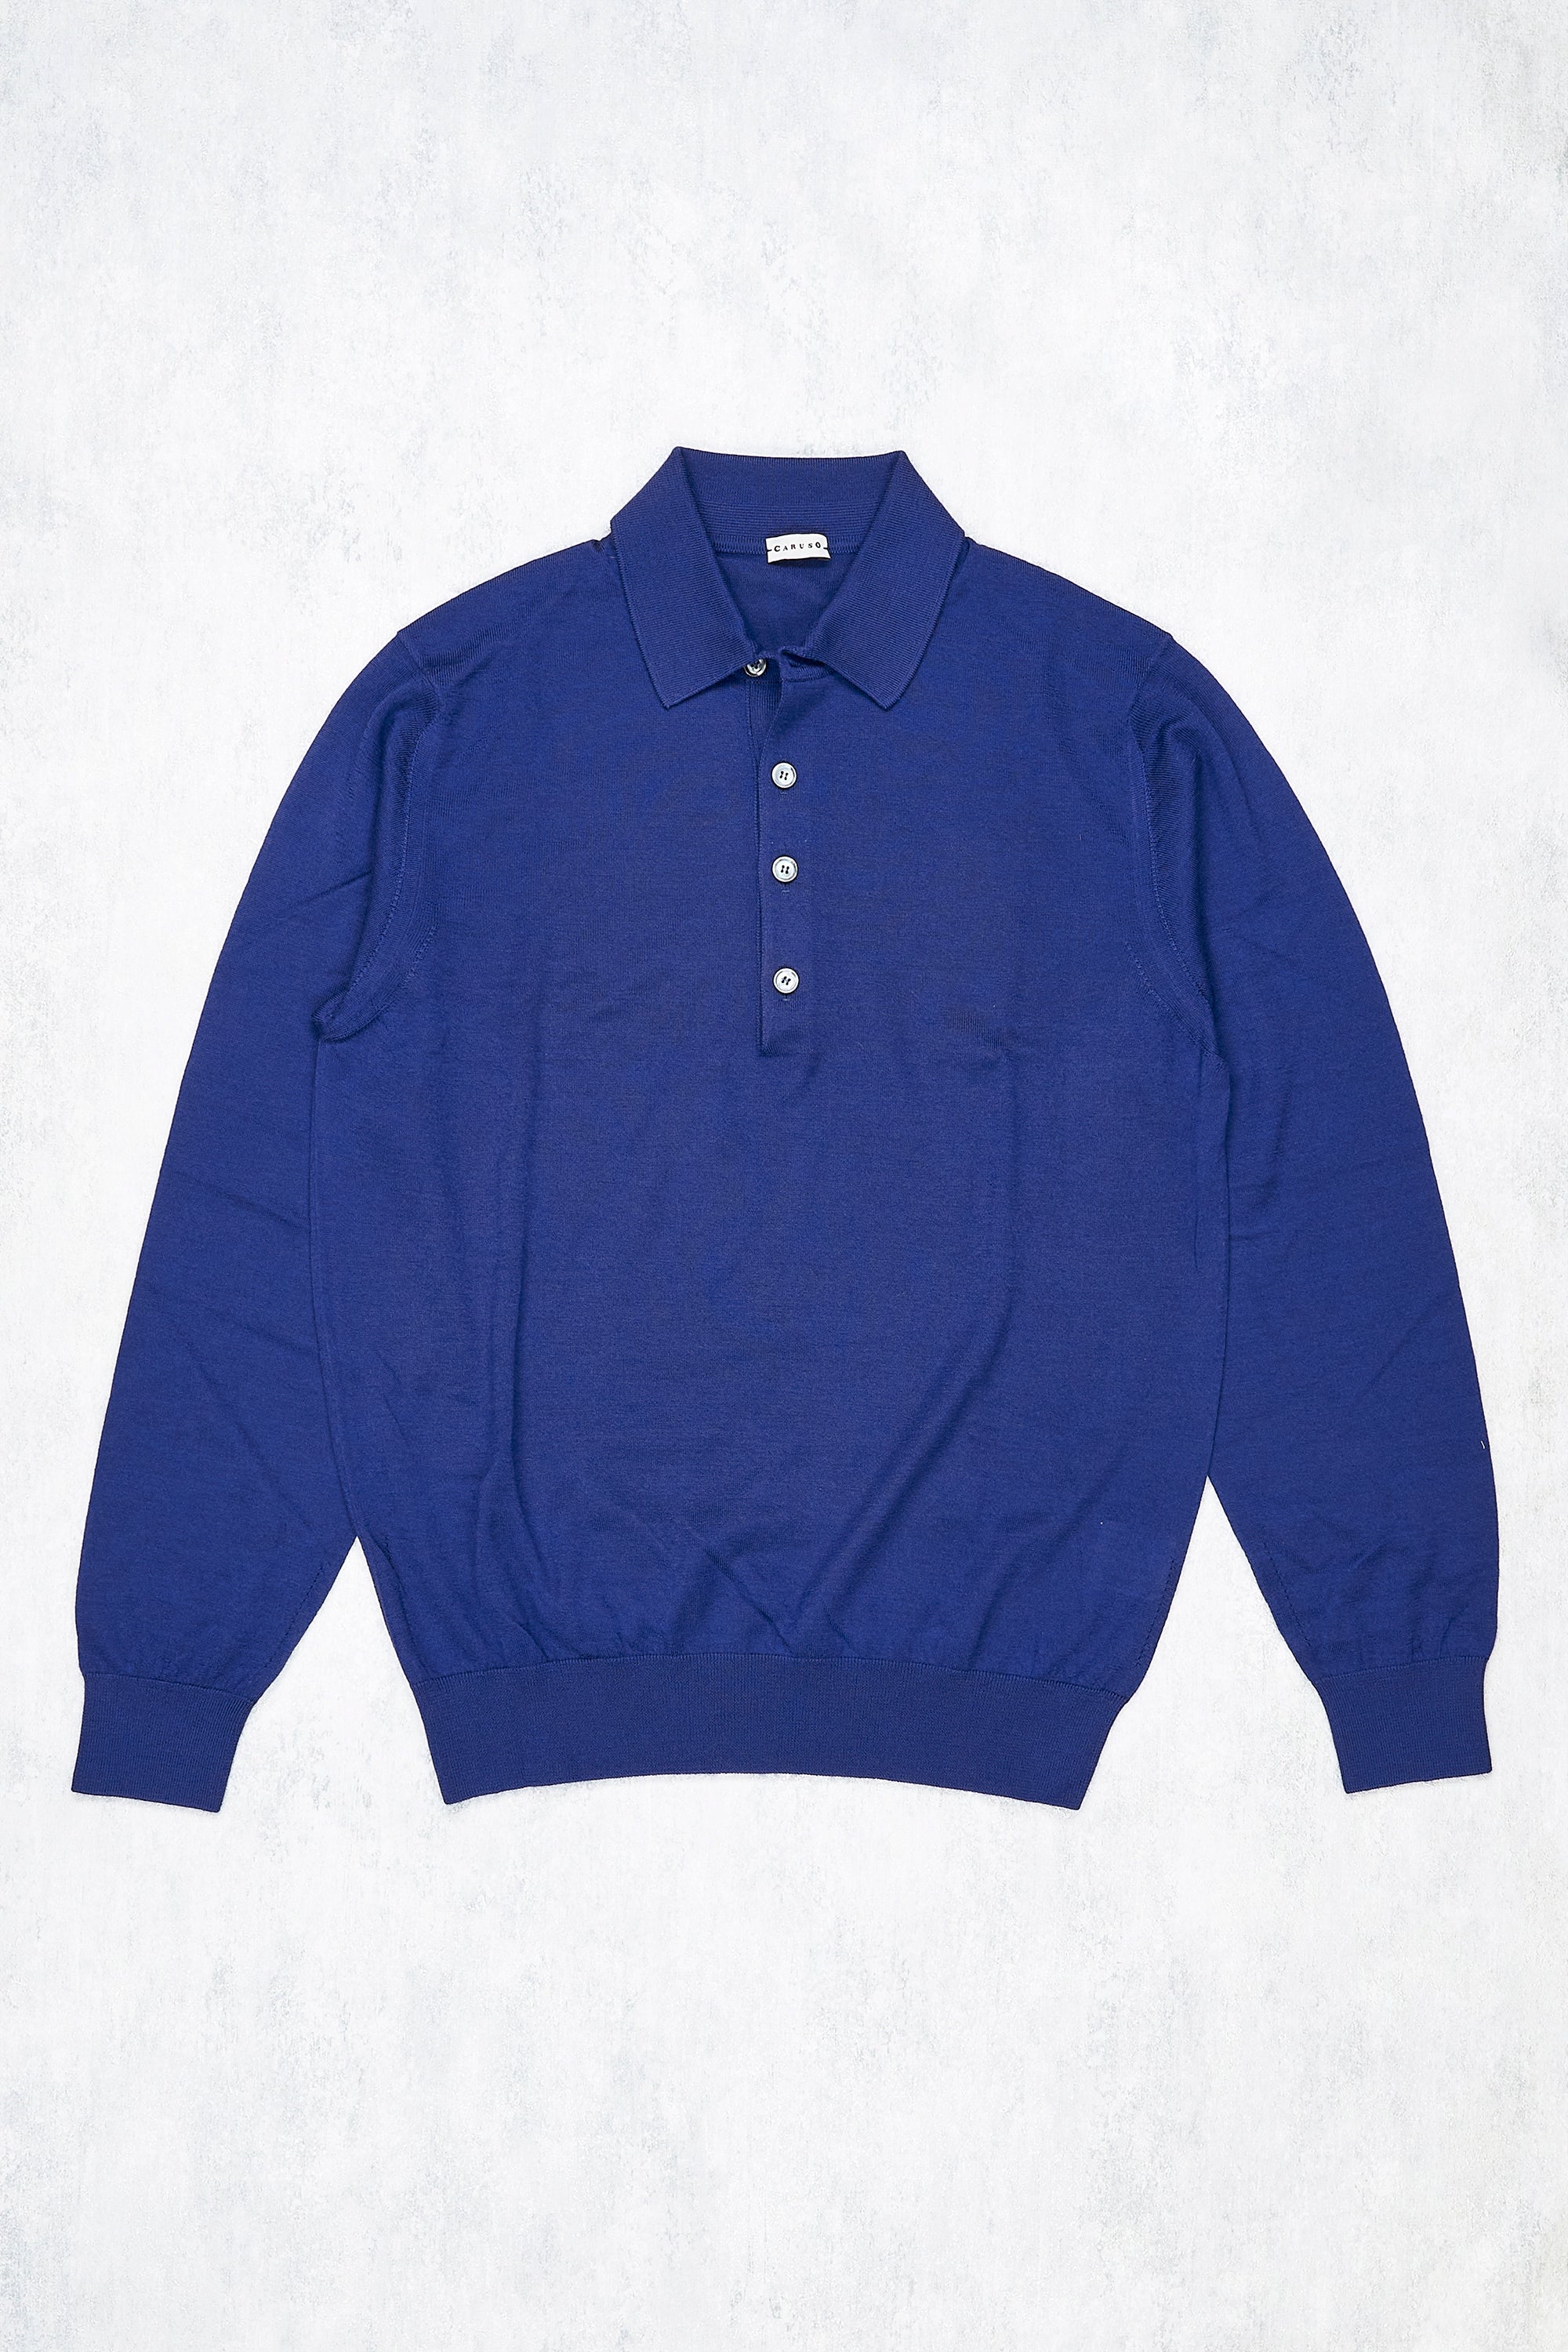 Caruso MA36 Royal Blue Cashmere Silk Long Sleeve Polo